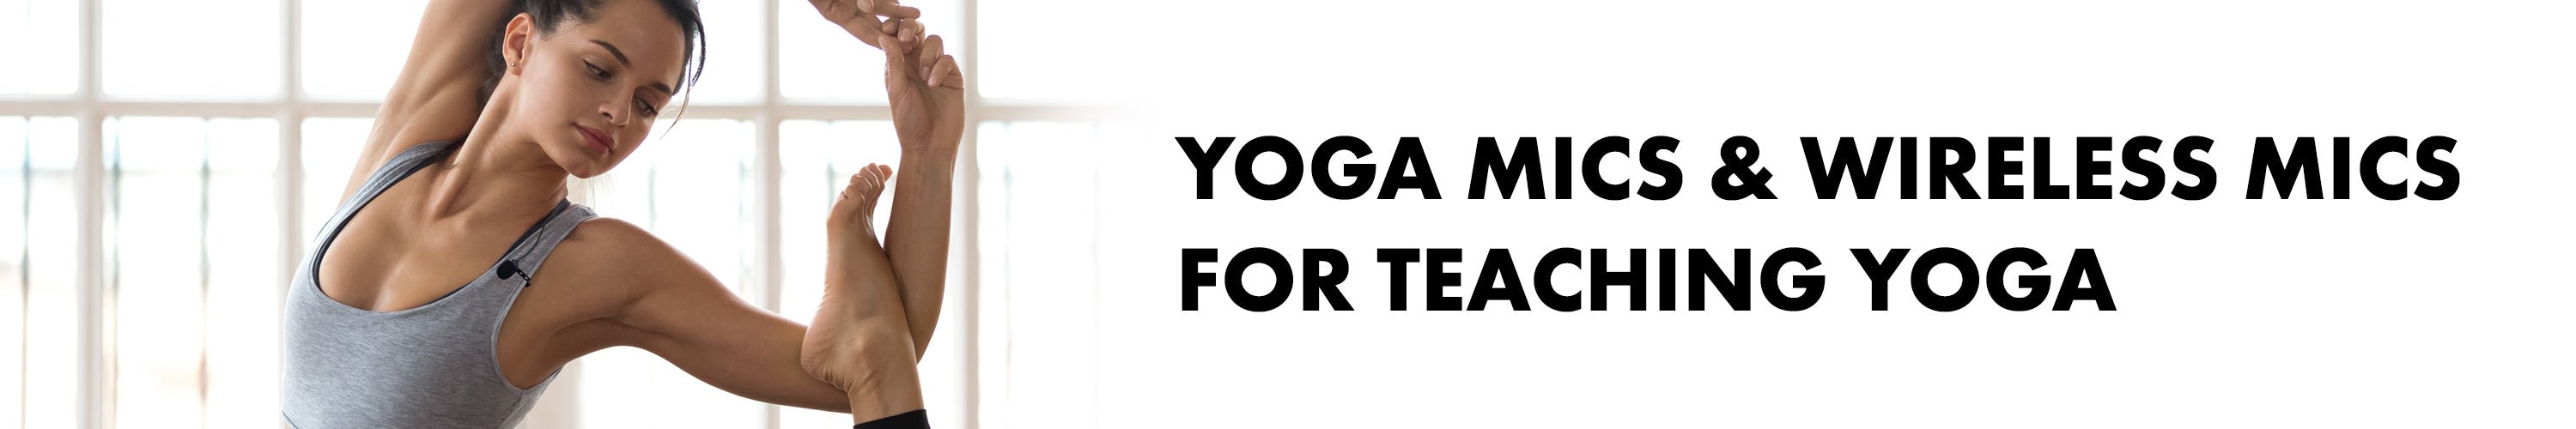 Yoga Mics & Wireless Mics for Teaching Yoga - Movo